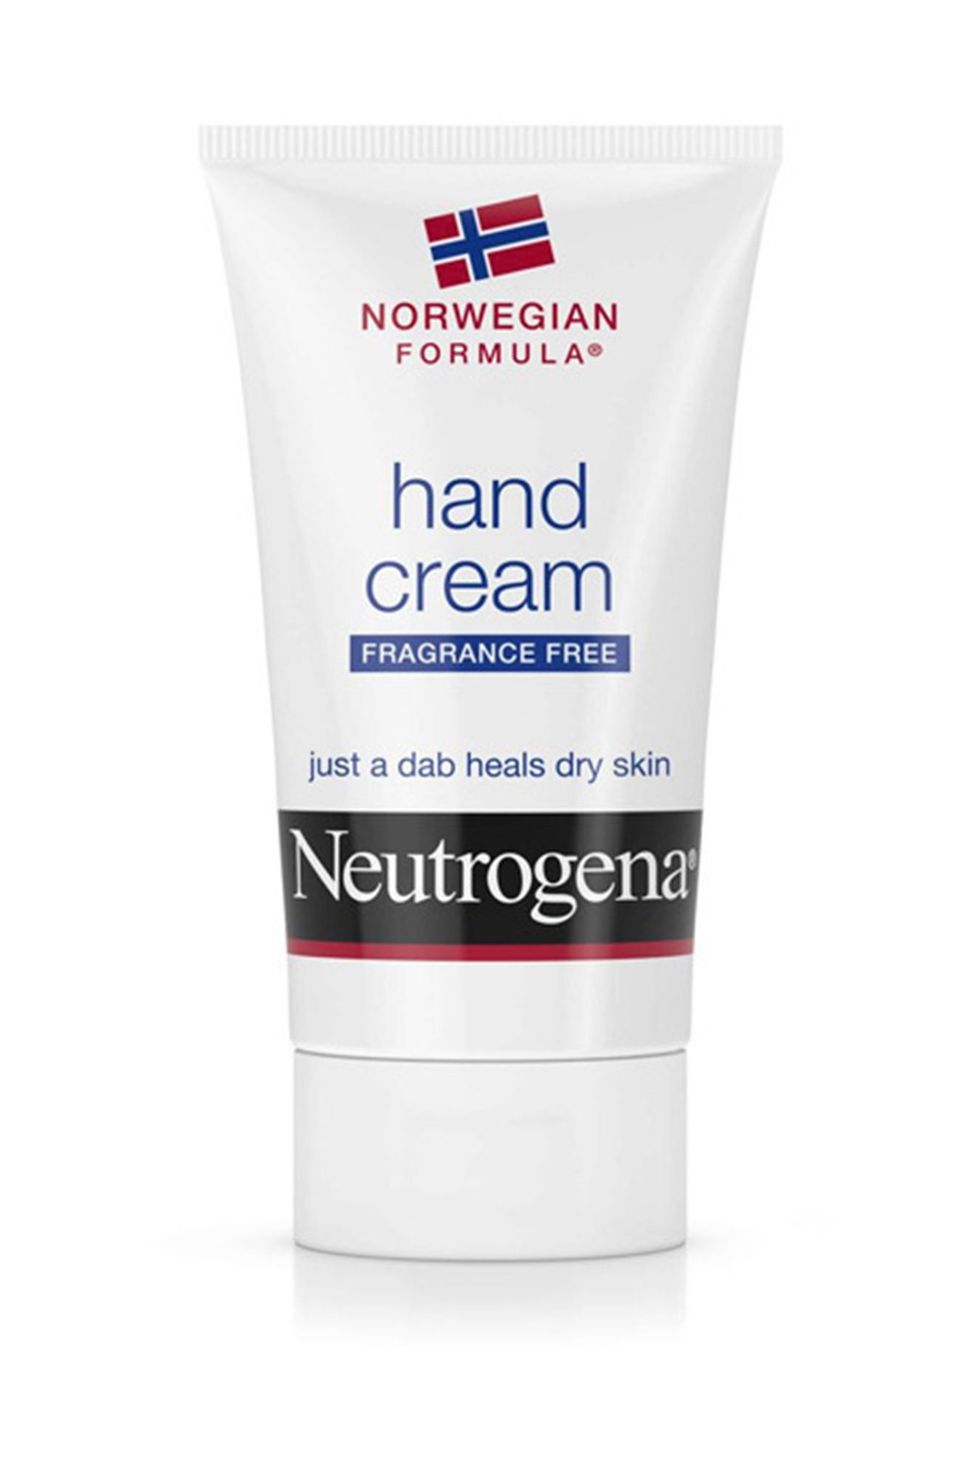 Neutrogena Norwegian Formula Dry Hand Cream